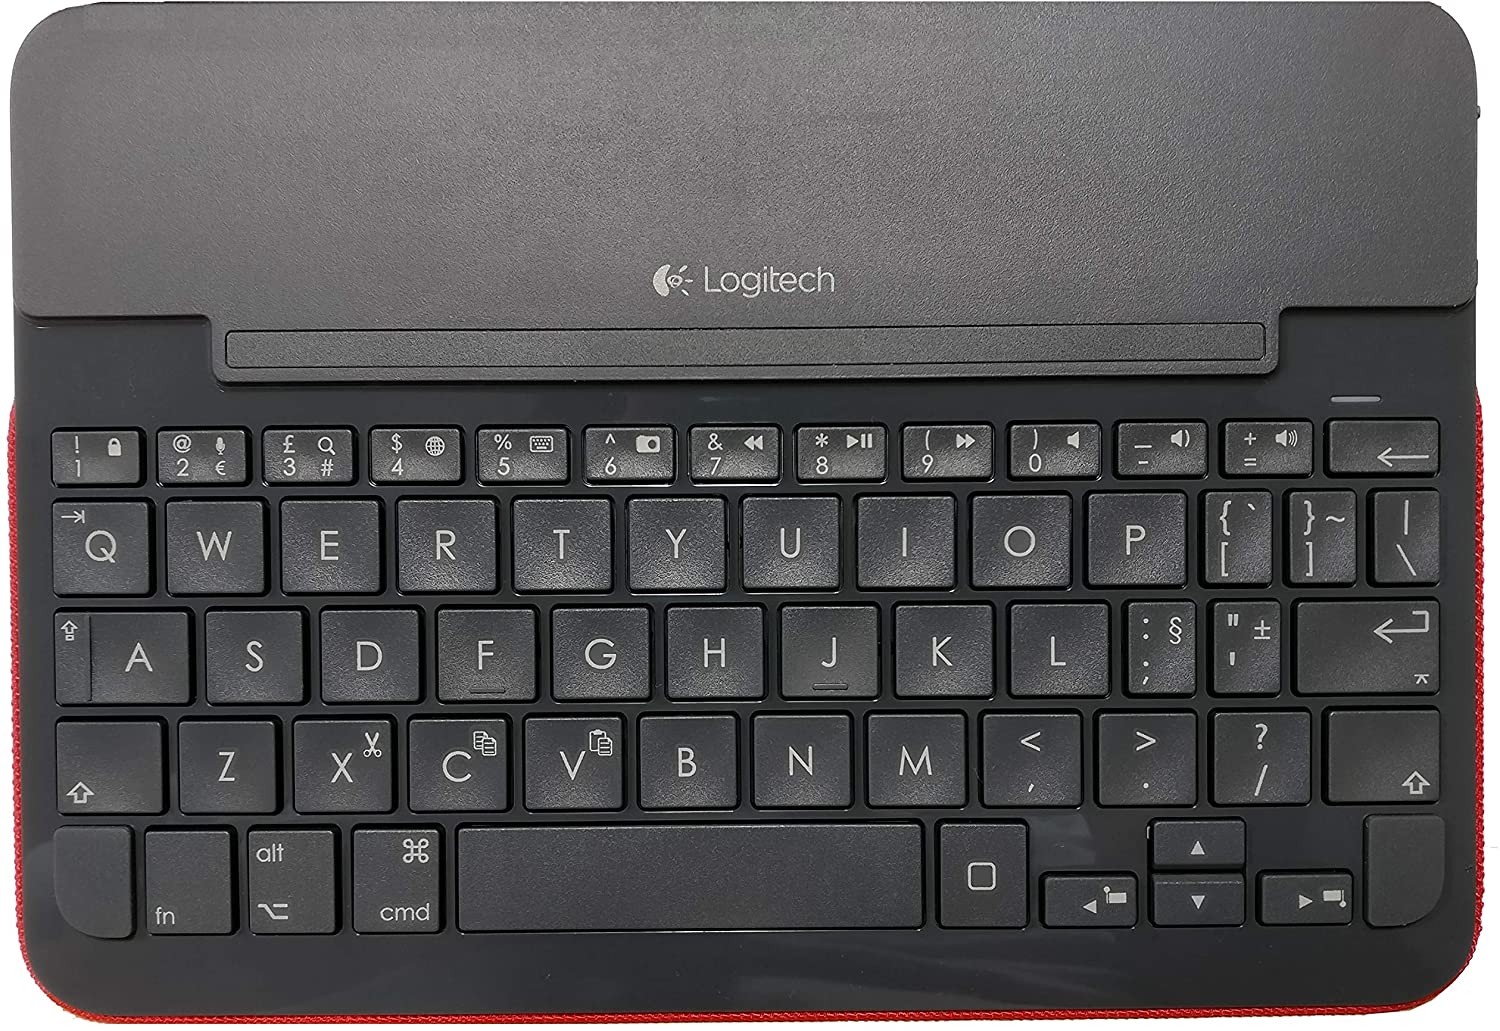 Logitech Canvas Keyboard Case for iPad mini 1, 2, 3 RED UK-Layout